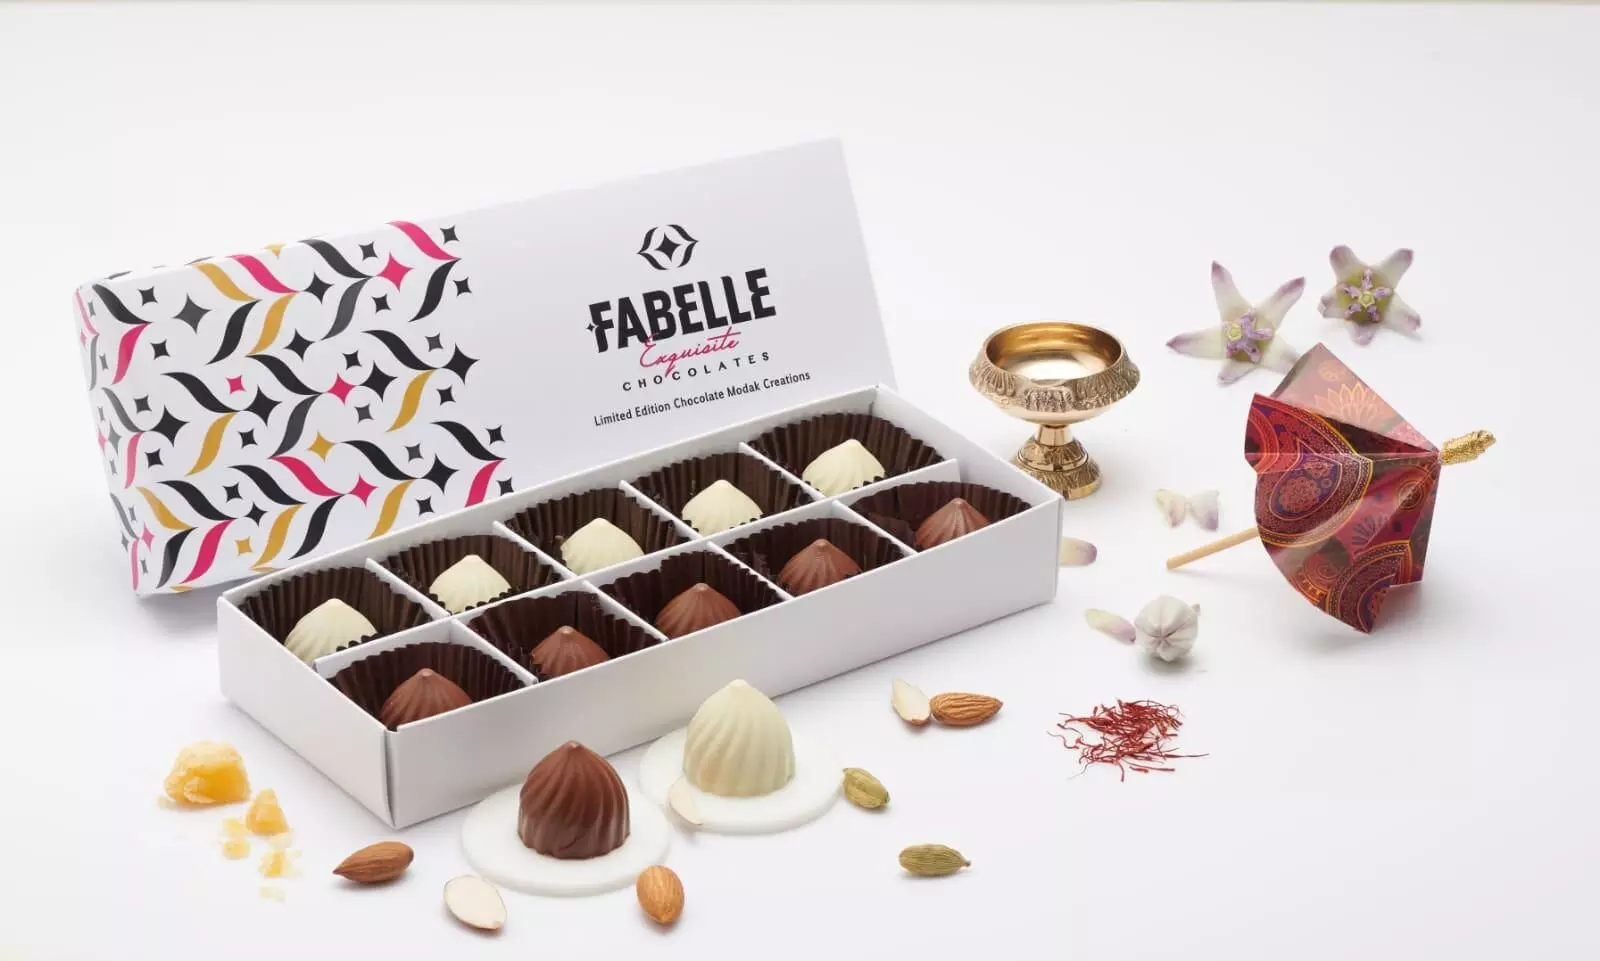 Fabelle brings chocolate modaks for Ganesh Chaturthi festivities